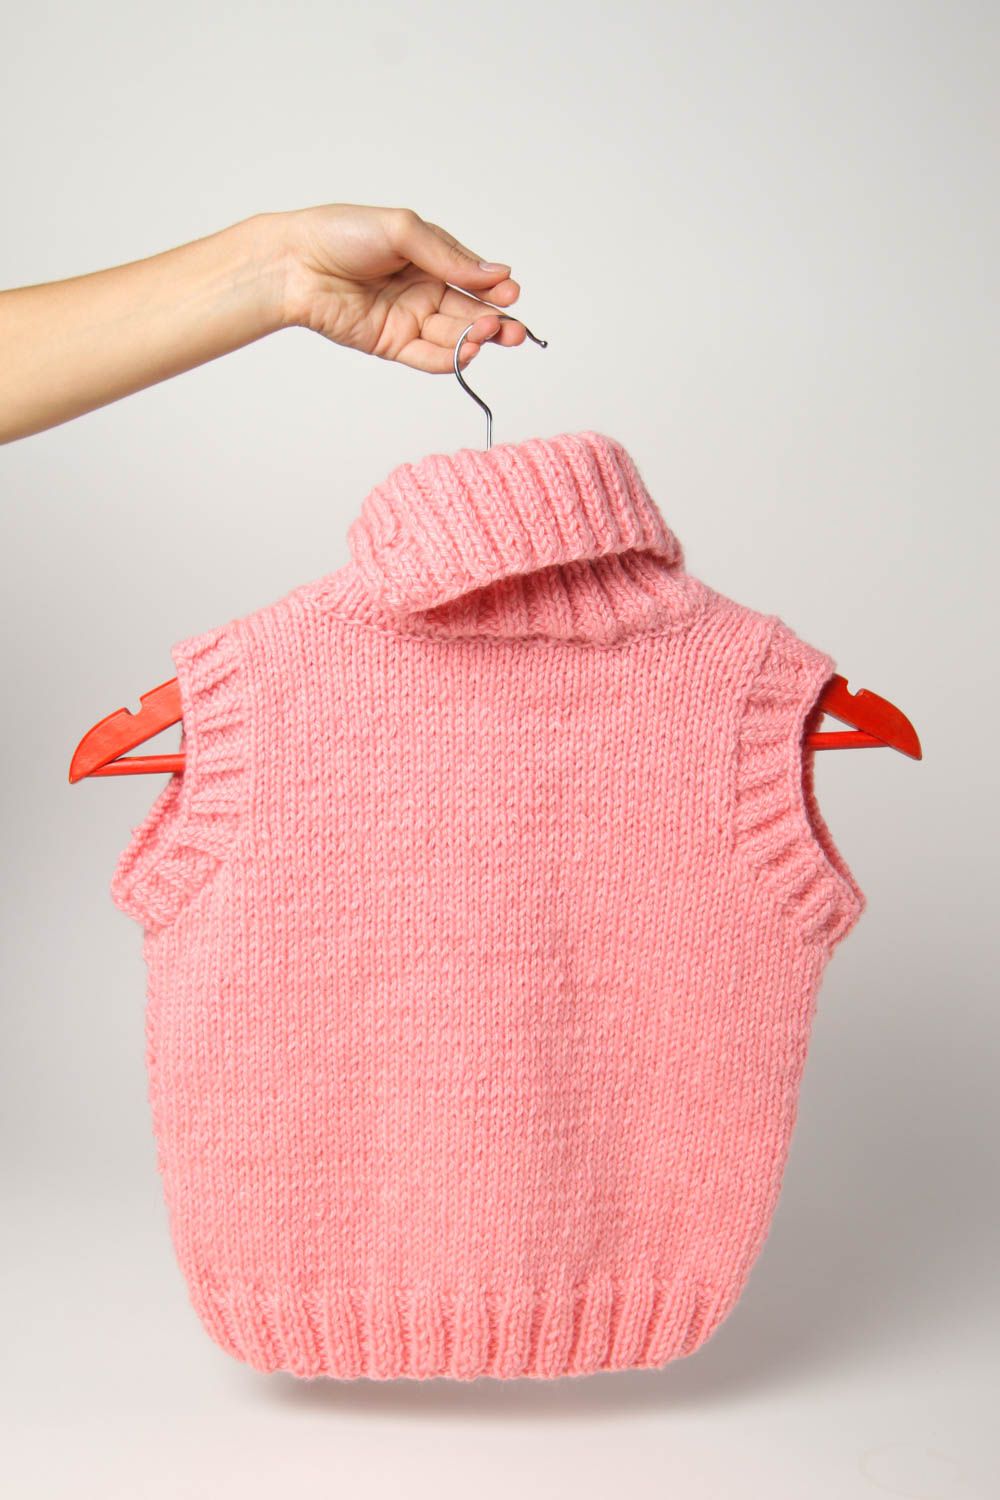 Designer vest pink winter waistcoat handmade vest knitted clothes for girls photo 3